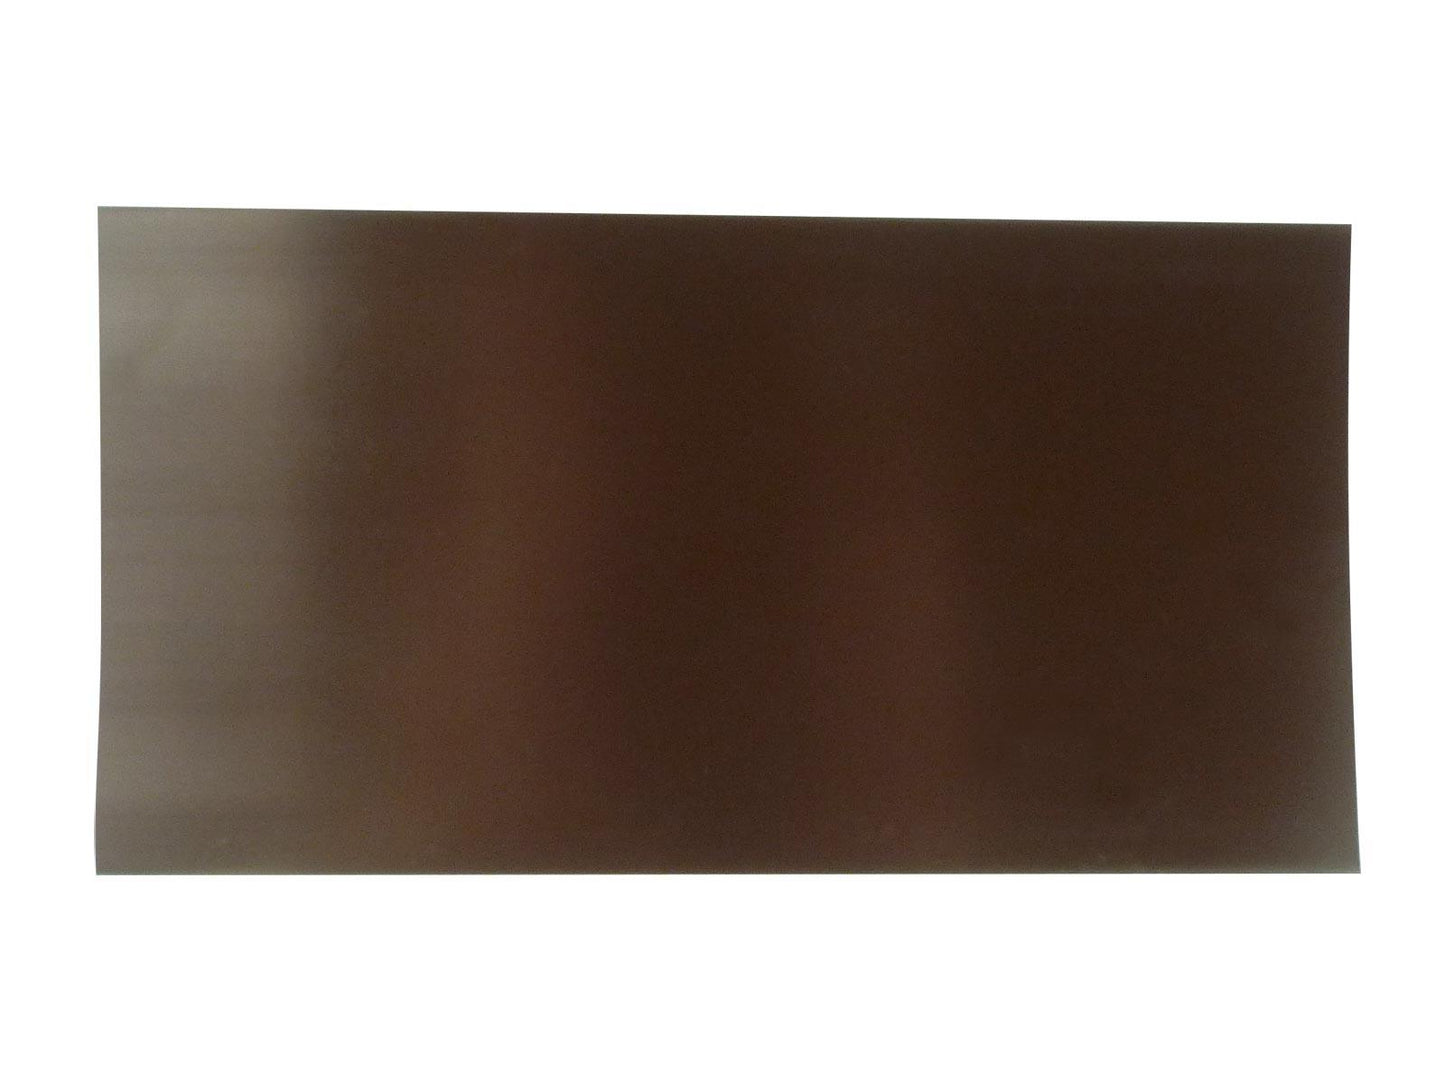 Incudo Brown Plain CAB Sheet - 200x100x1.5mm (7.9x3.94x0.06")